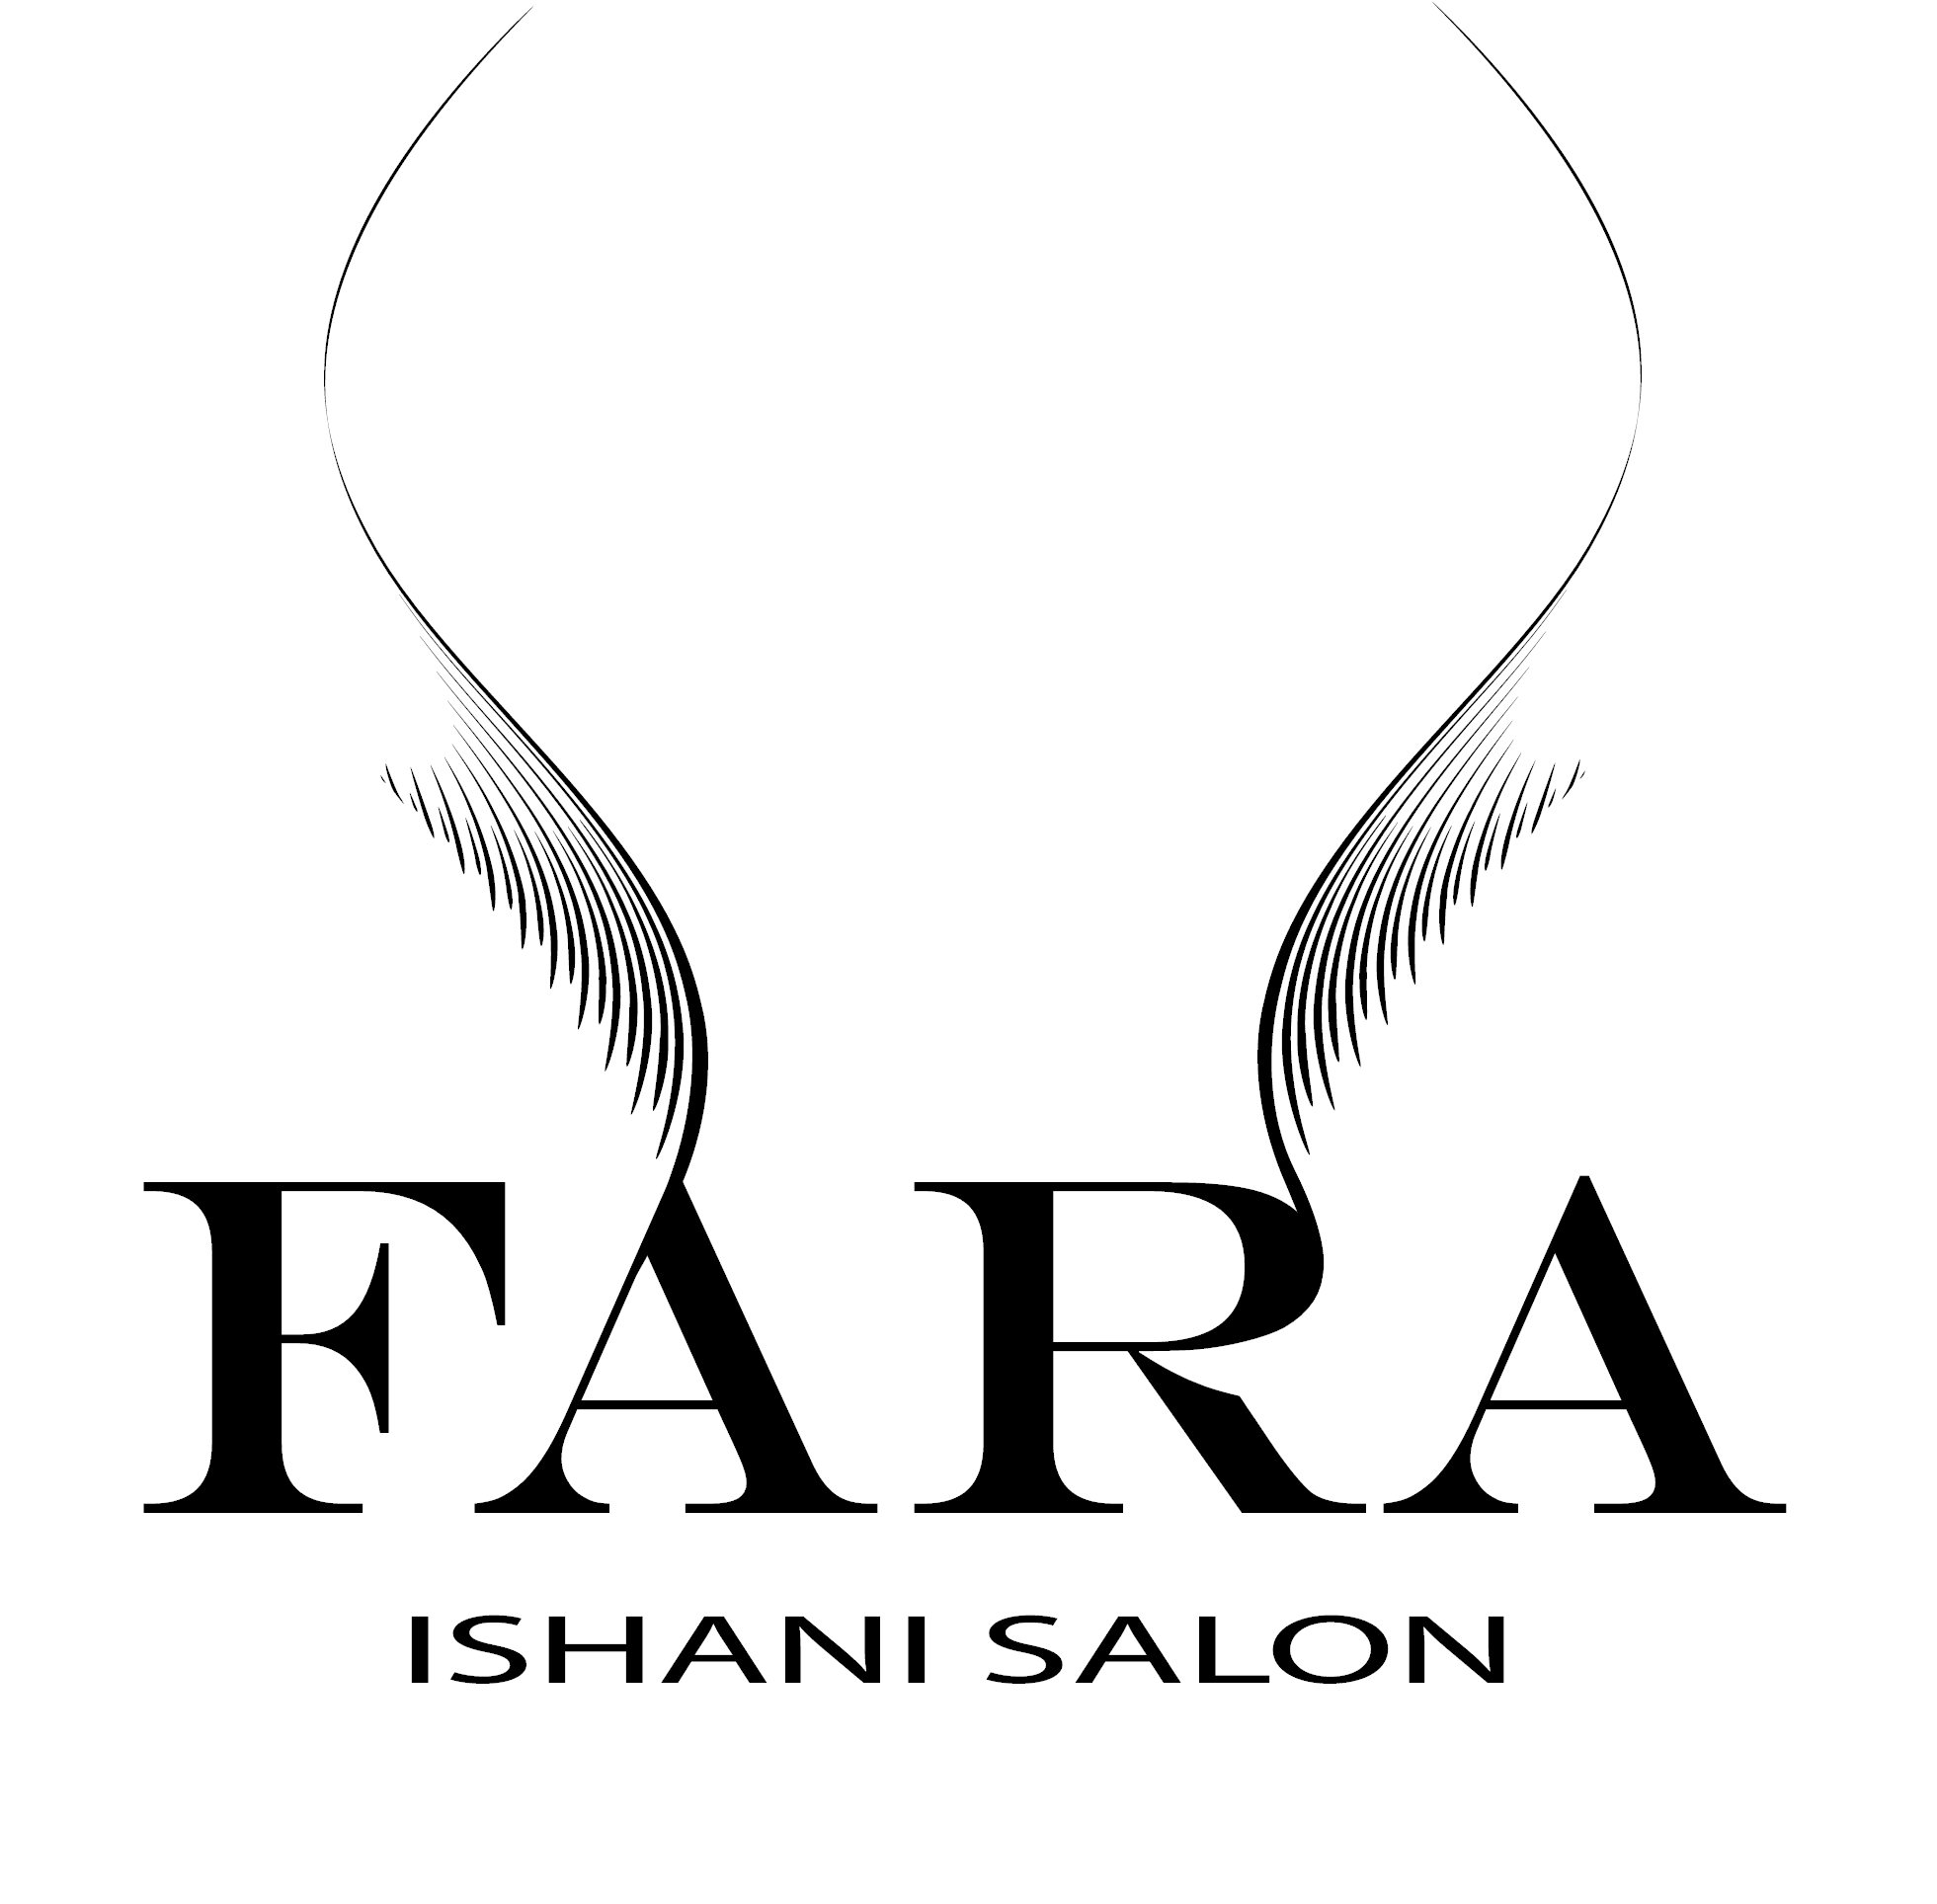 Fara Logo - FARA LOGO BLACK WHITE BACKGROUND | FARA ISHANI SALON